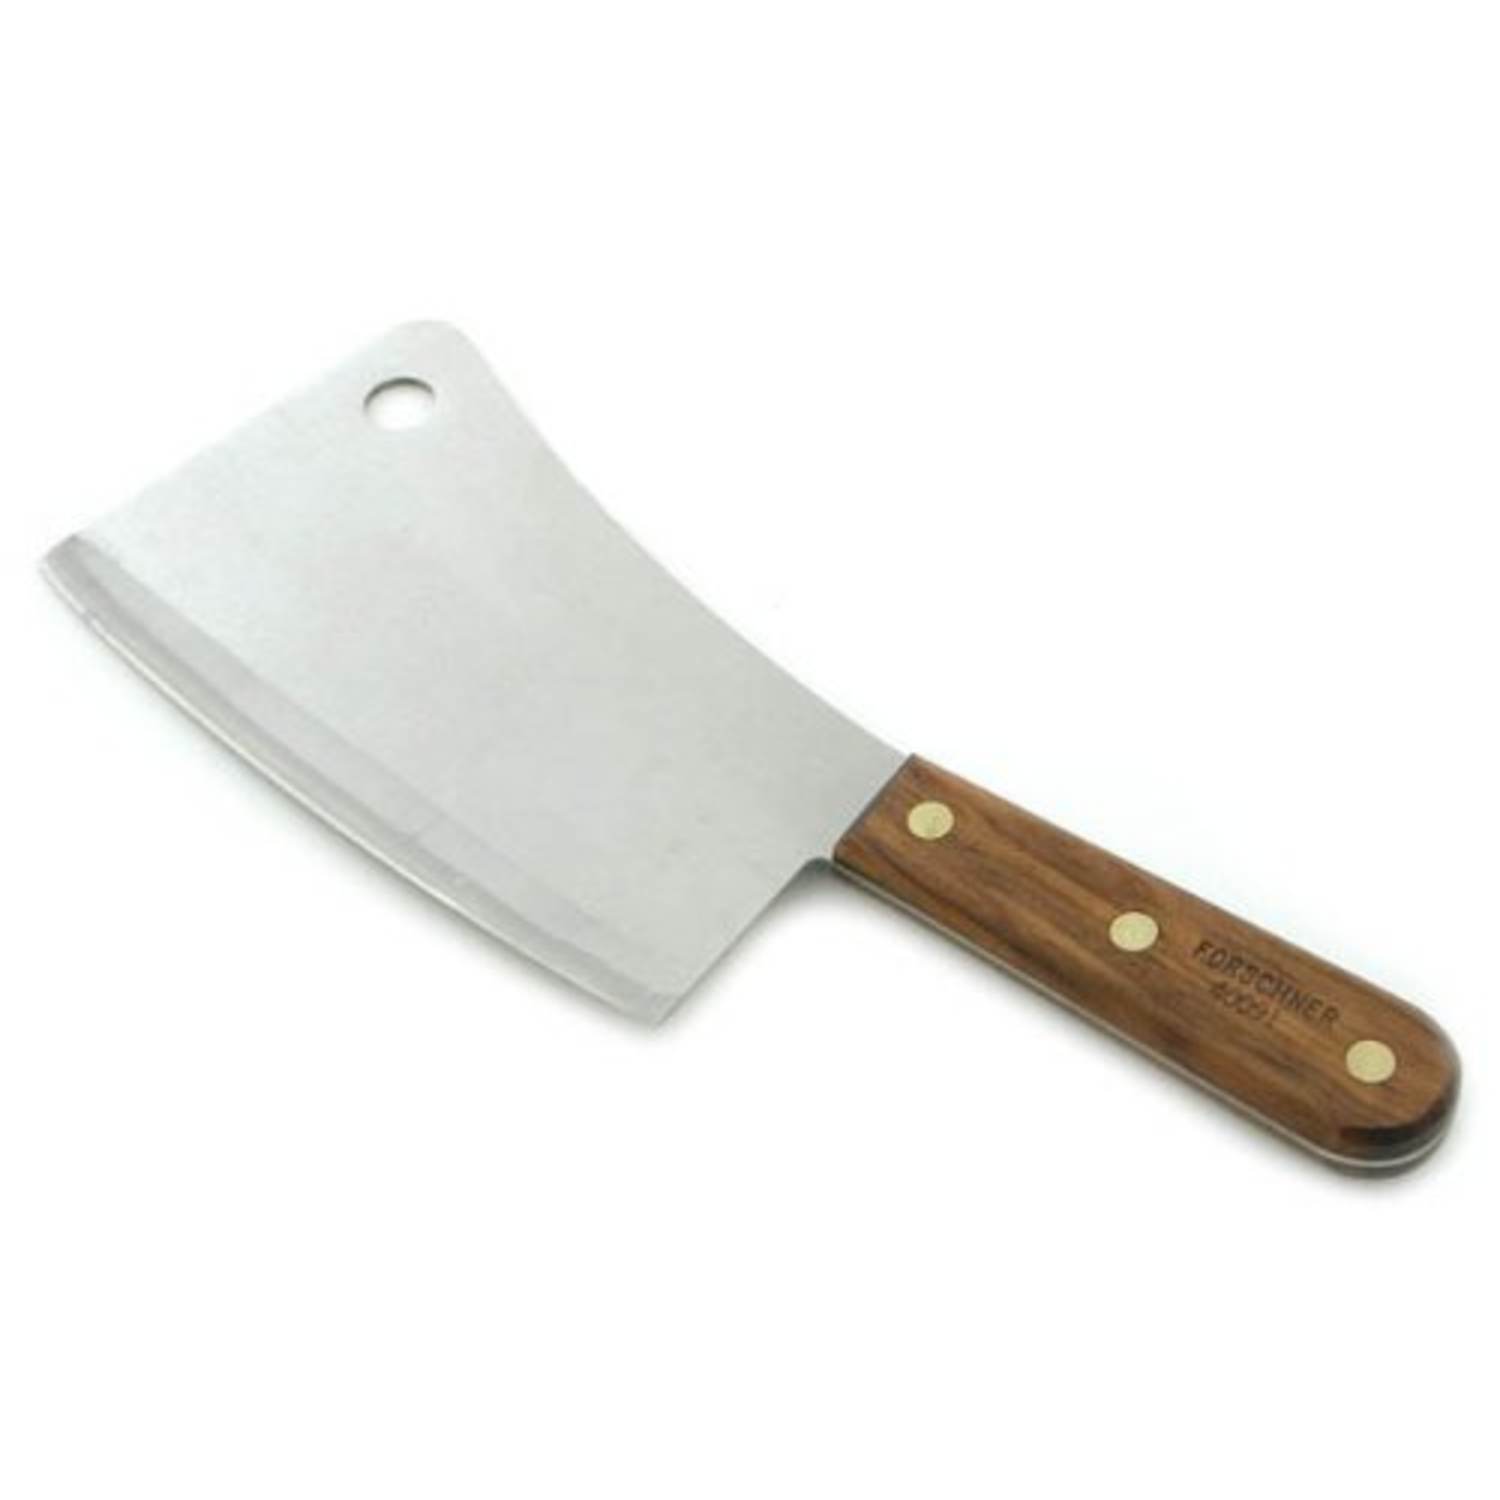 https://cdn.shoplightspeed.com/shops/633447/files/40228384/1500x4000x3/victorinox-wood-handle-cleaver-knife.jpg